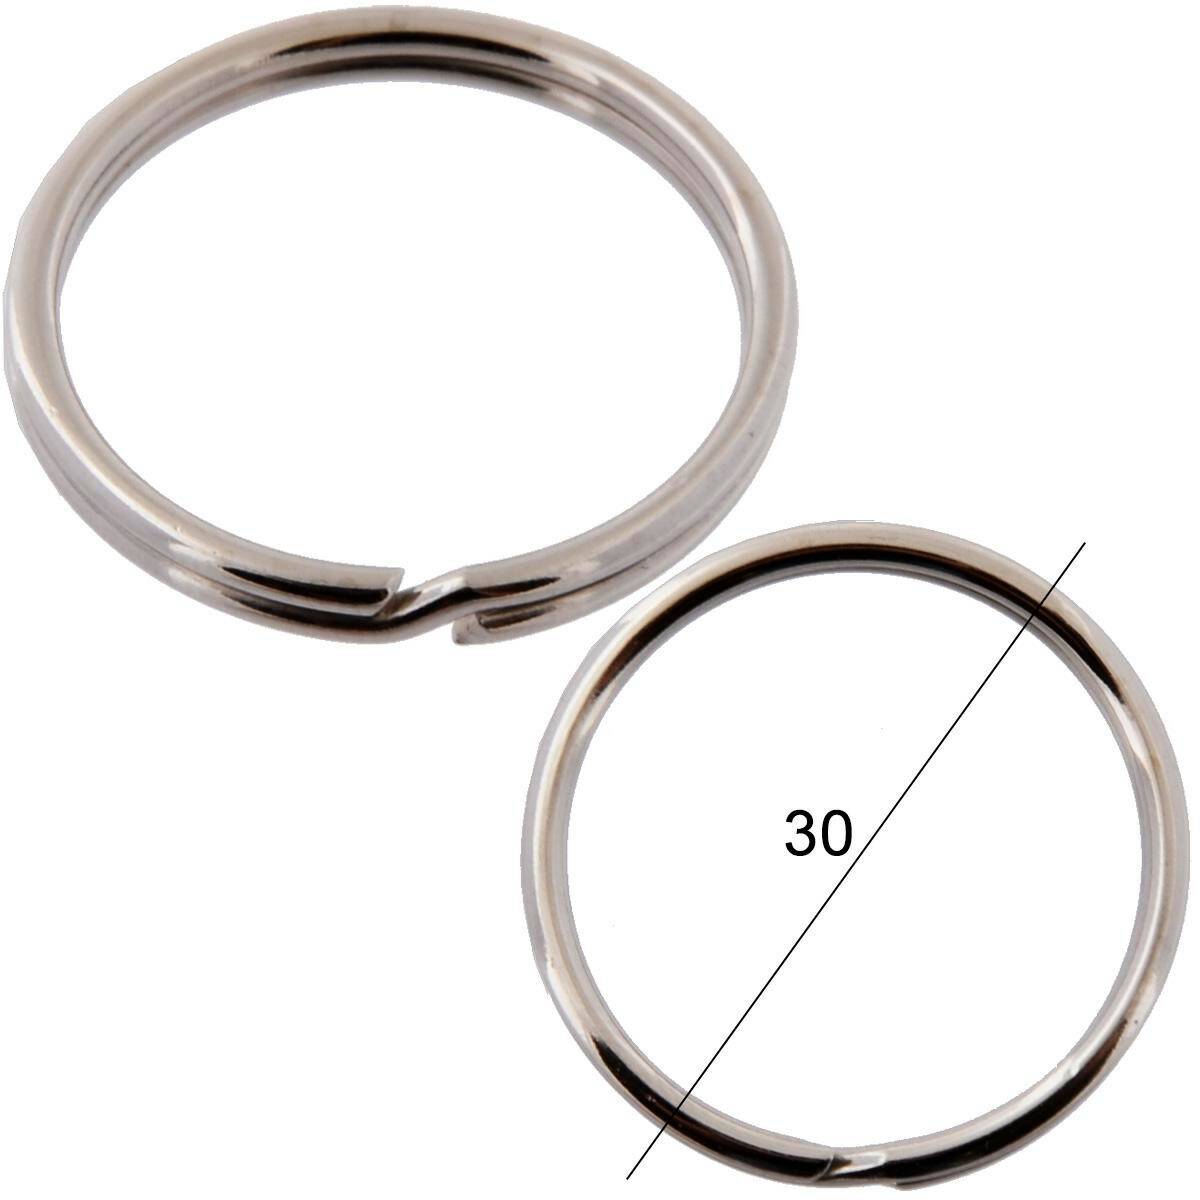 Key rings standard - diameter 30mm